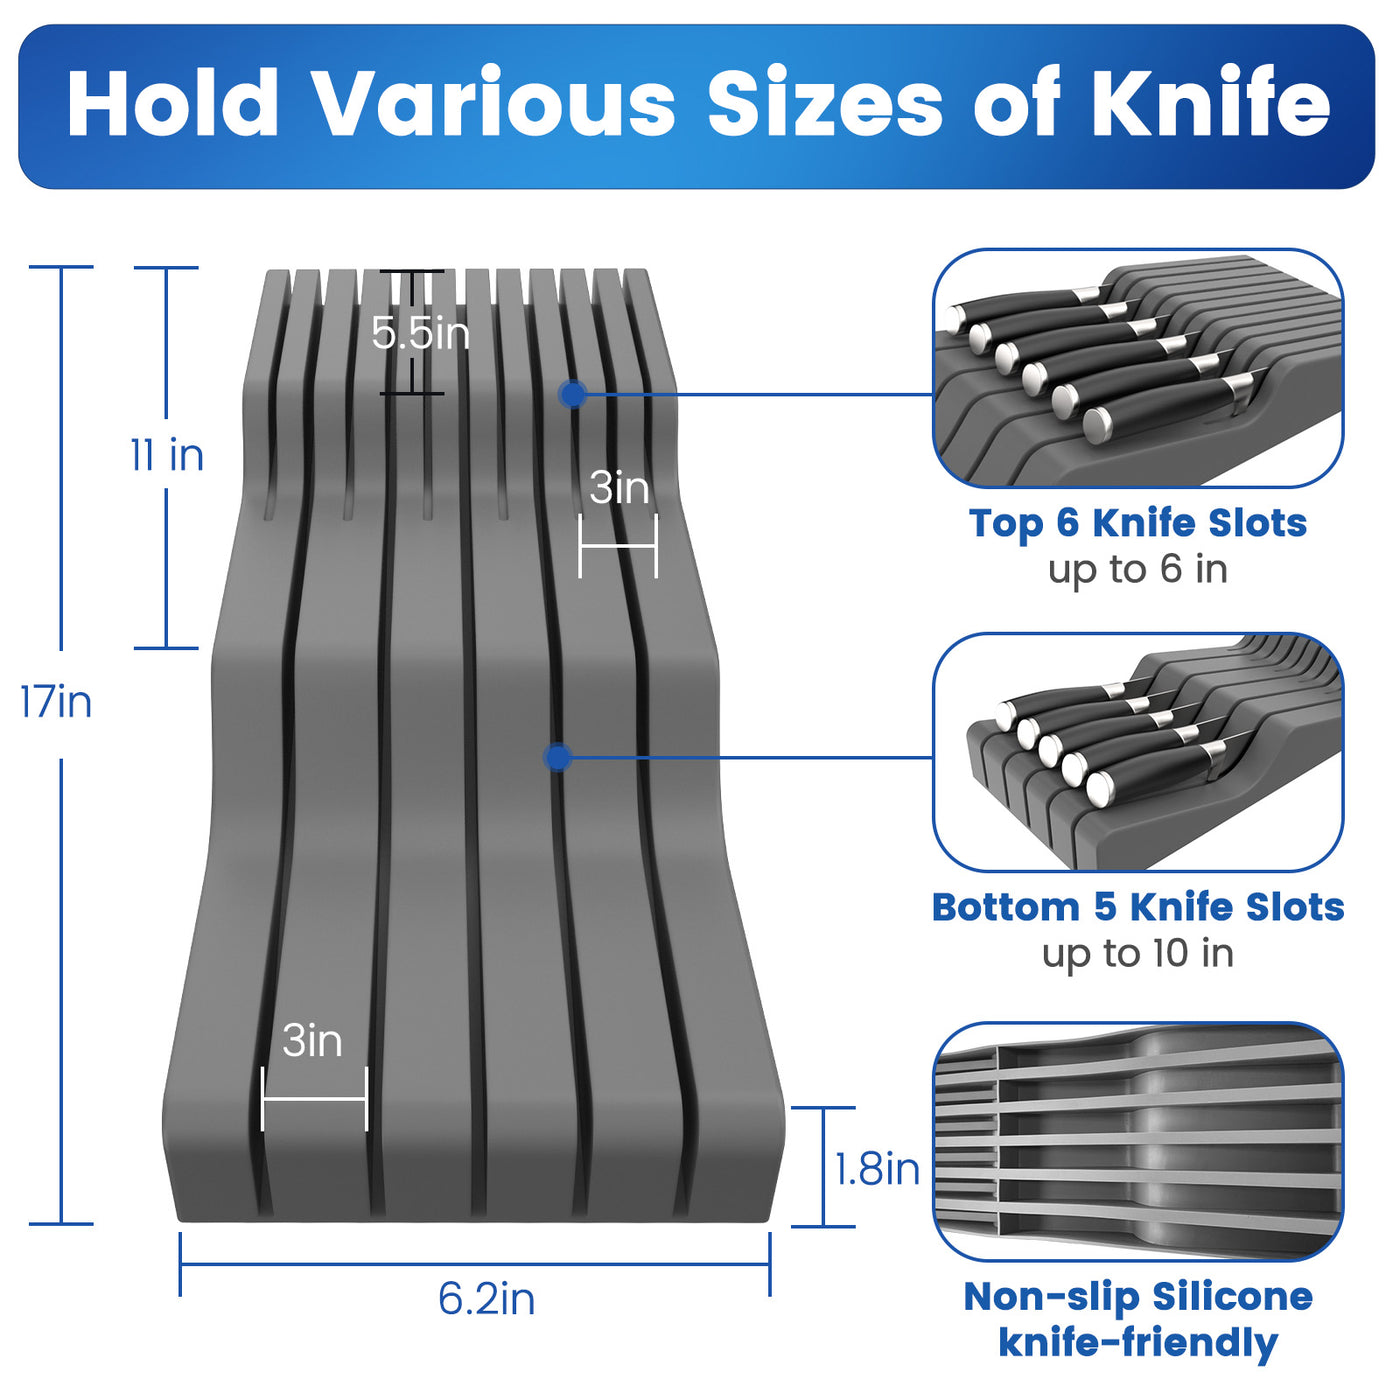 Knife Drawer Organizer Silicone Holds 11 knives (Not Included), in Drawer Knife Block Organizer, Knife-friendly & Dishwasher-safe Kitchen Organization Drawer Storage – Compact, Grey